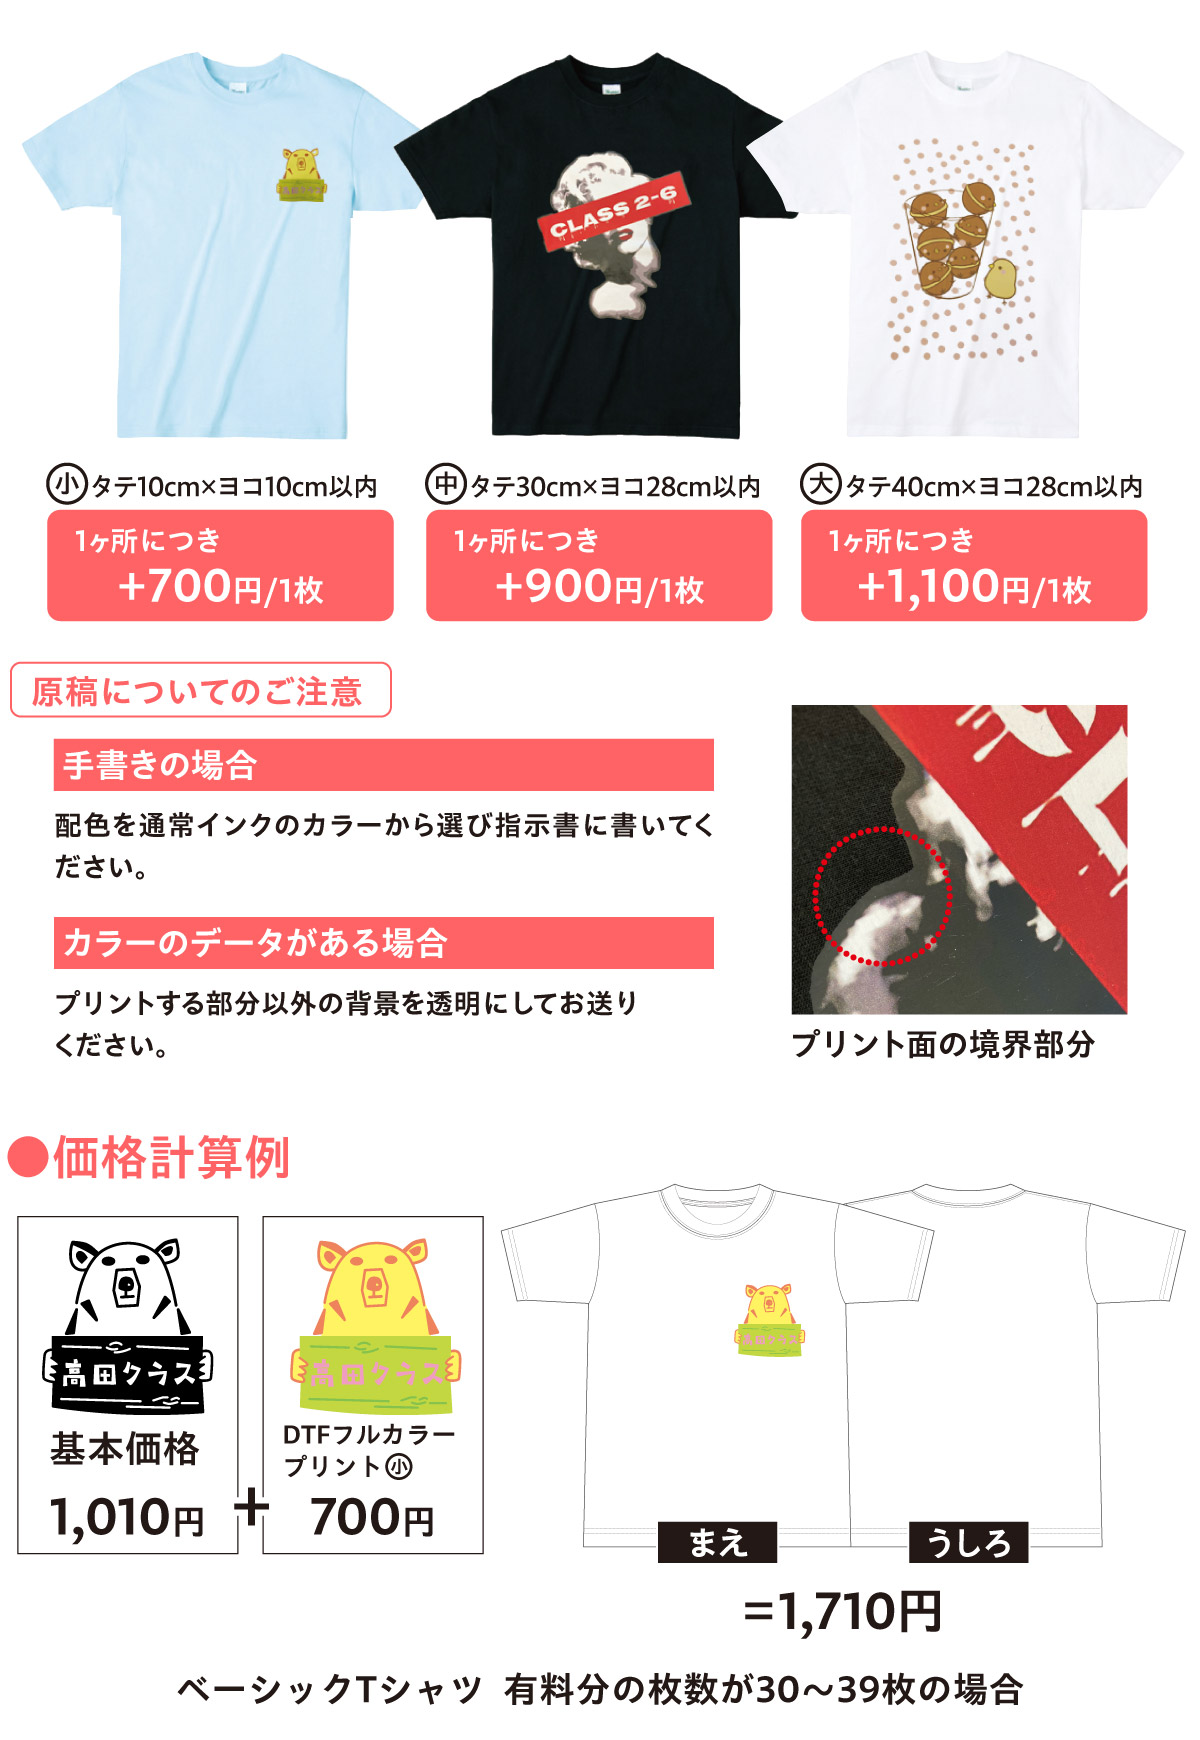 Class T-shirts【日本コーイン】 / インク・プリントオプション